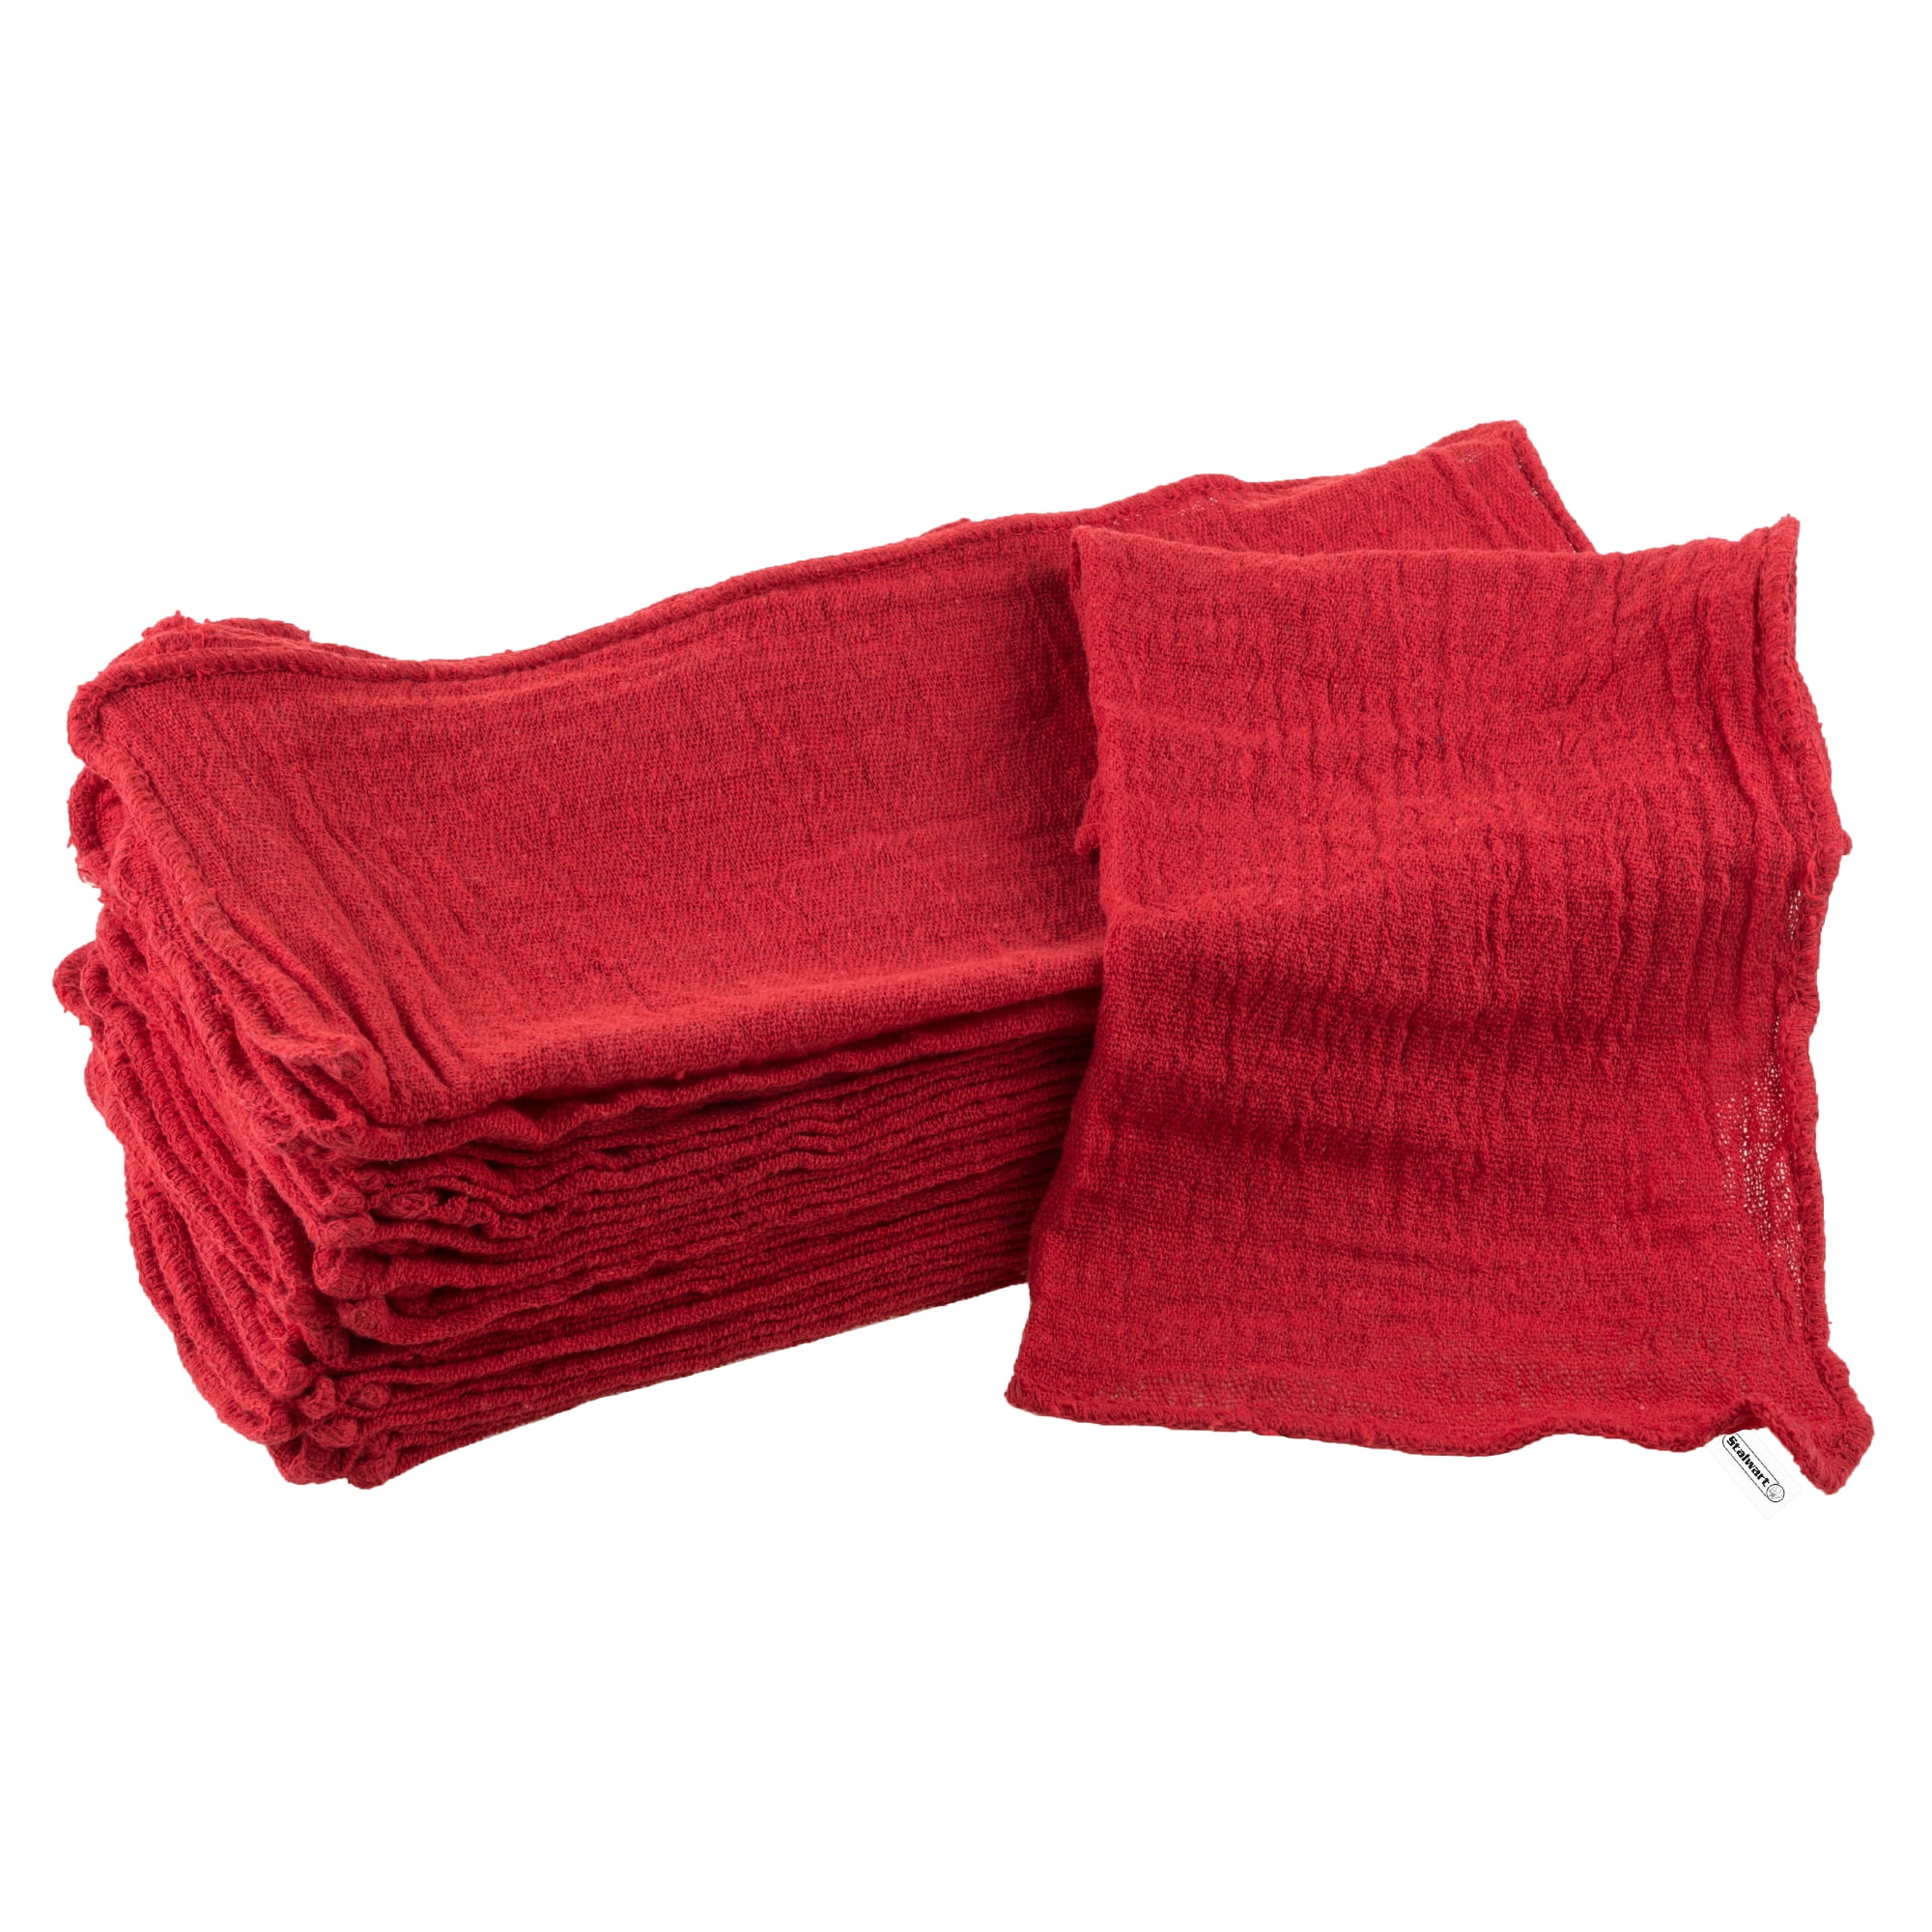 100 new wipers mechanics rag shop rags towels red large jumbo 13x15 